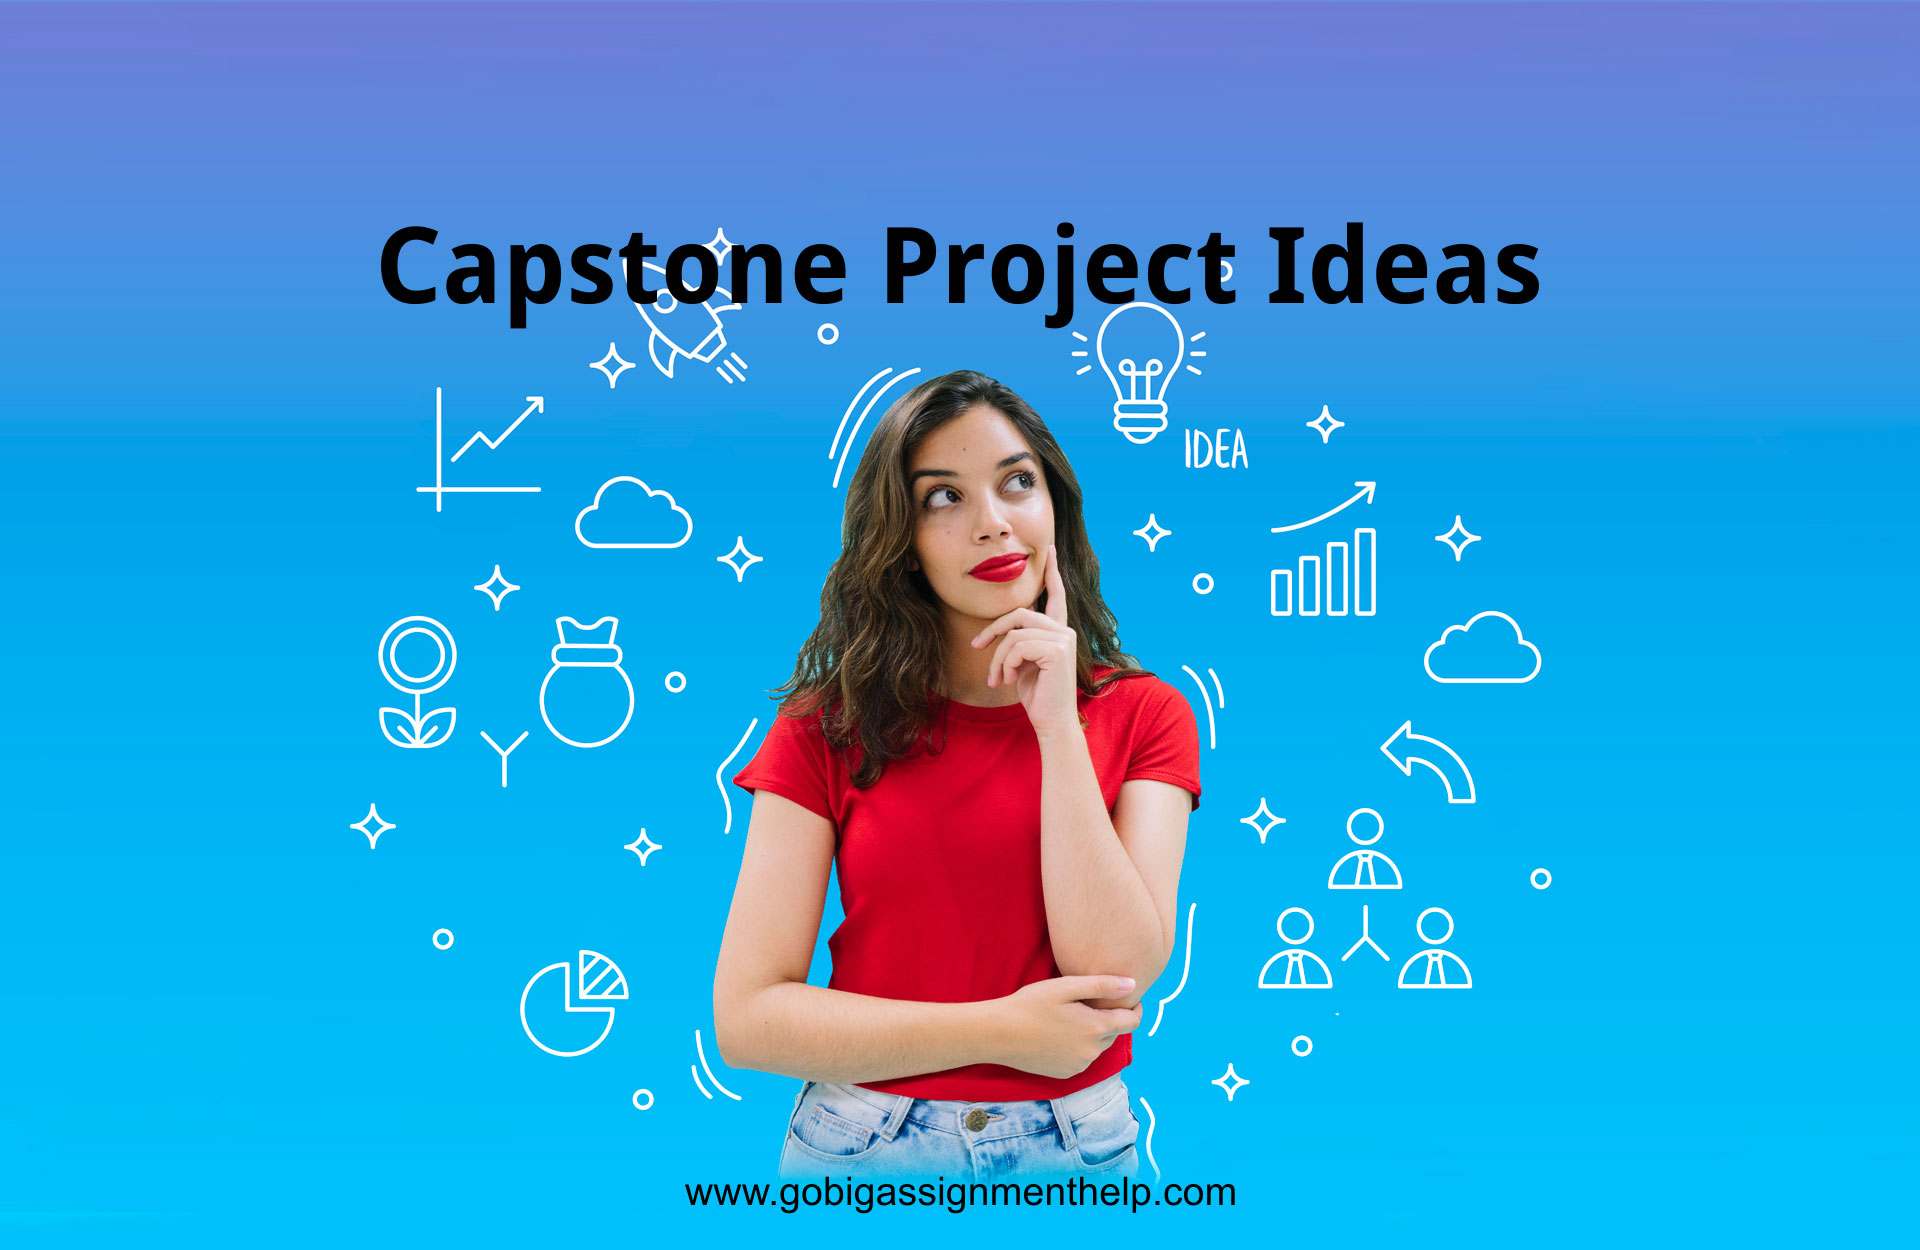 nursing capstone project ideas